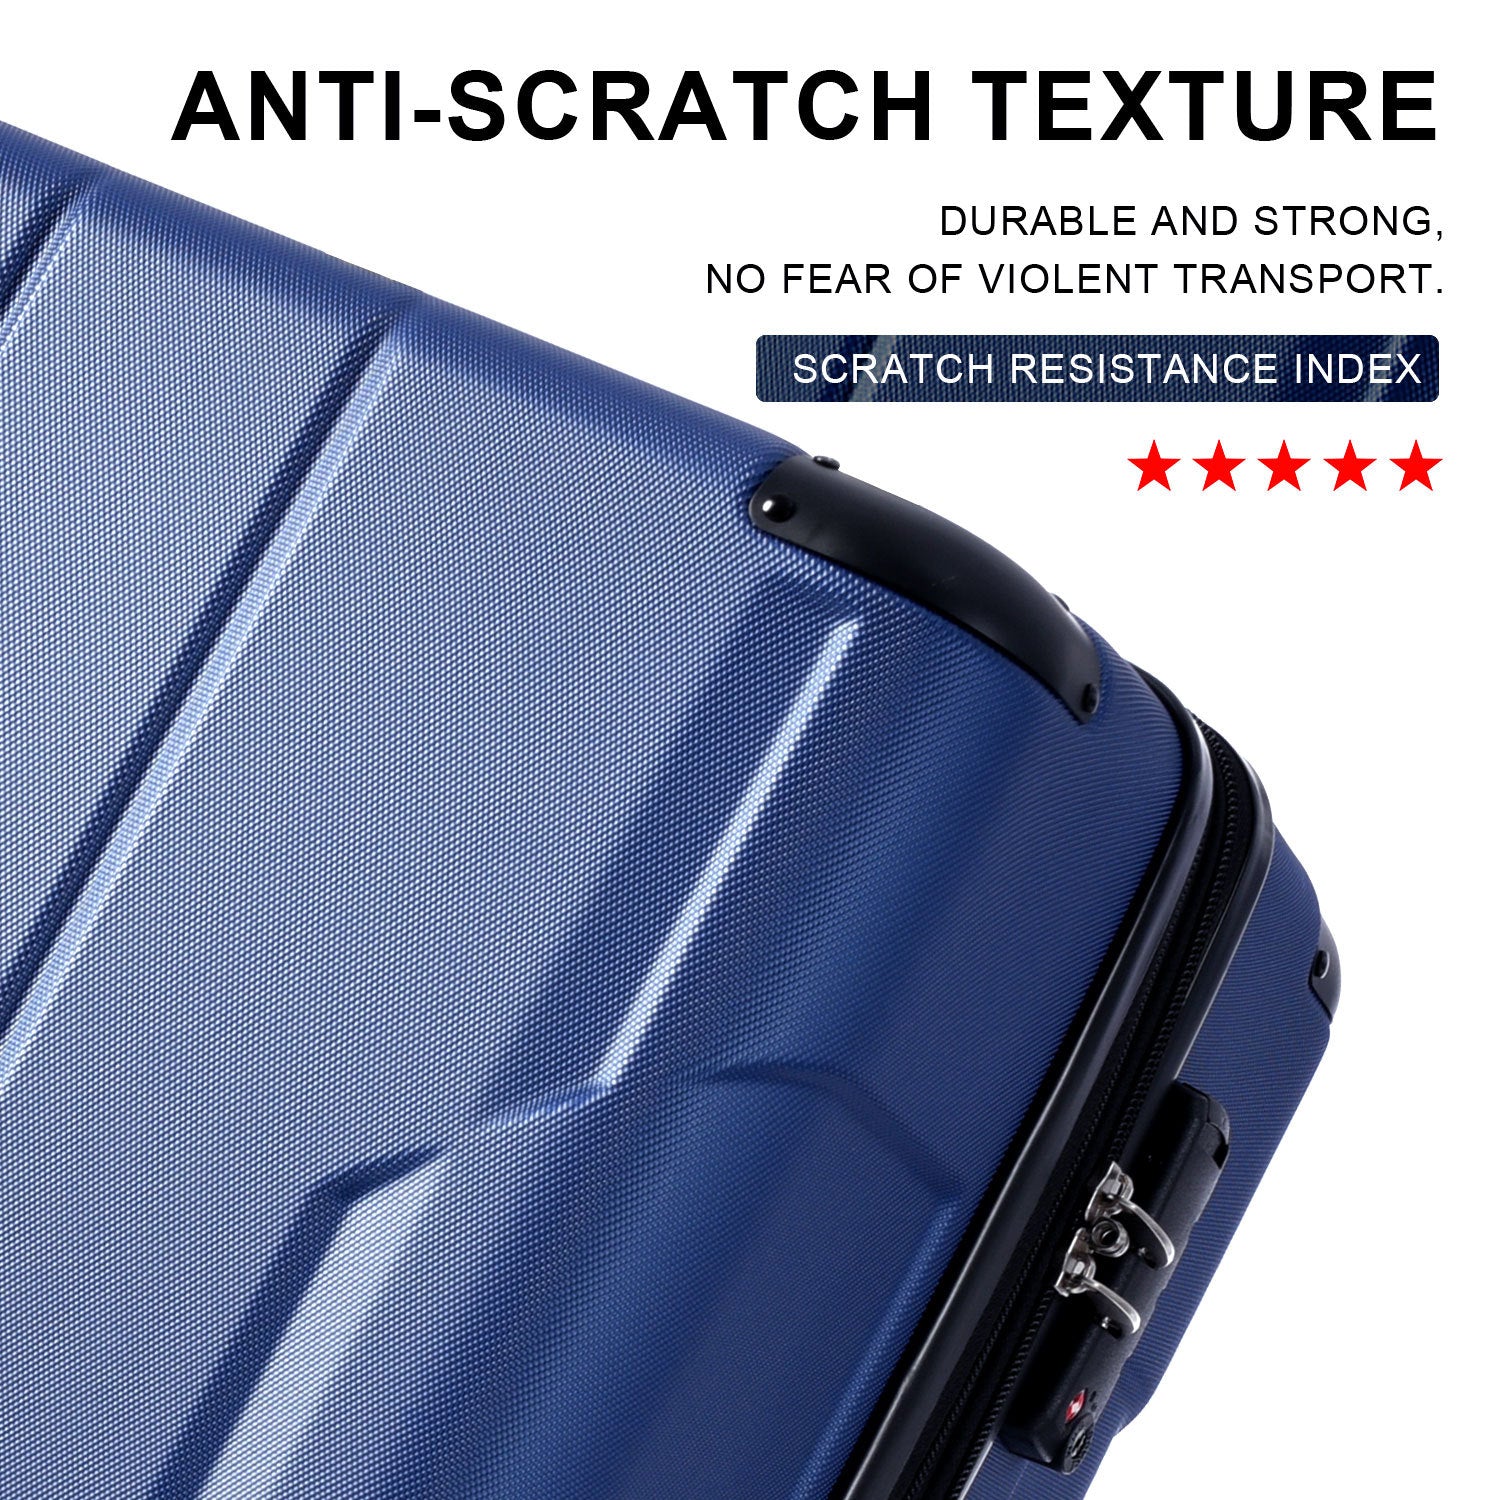 Hardside Luggage Sets 2 Piece Suitcase Set Expandable blue-abs